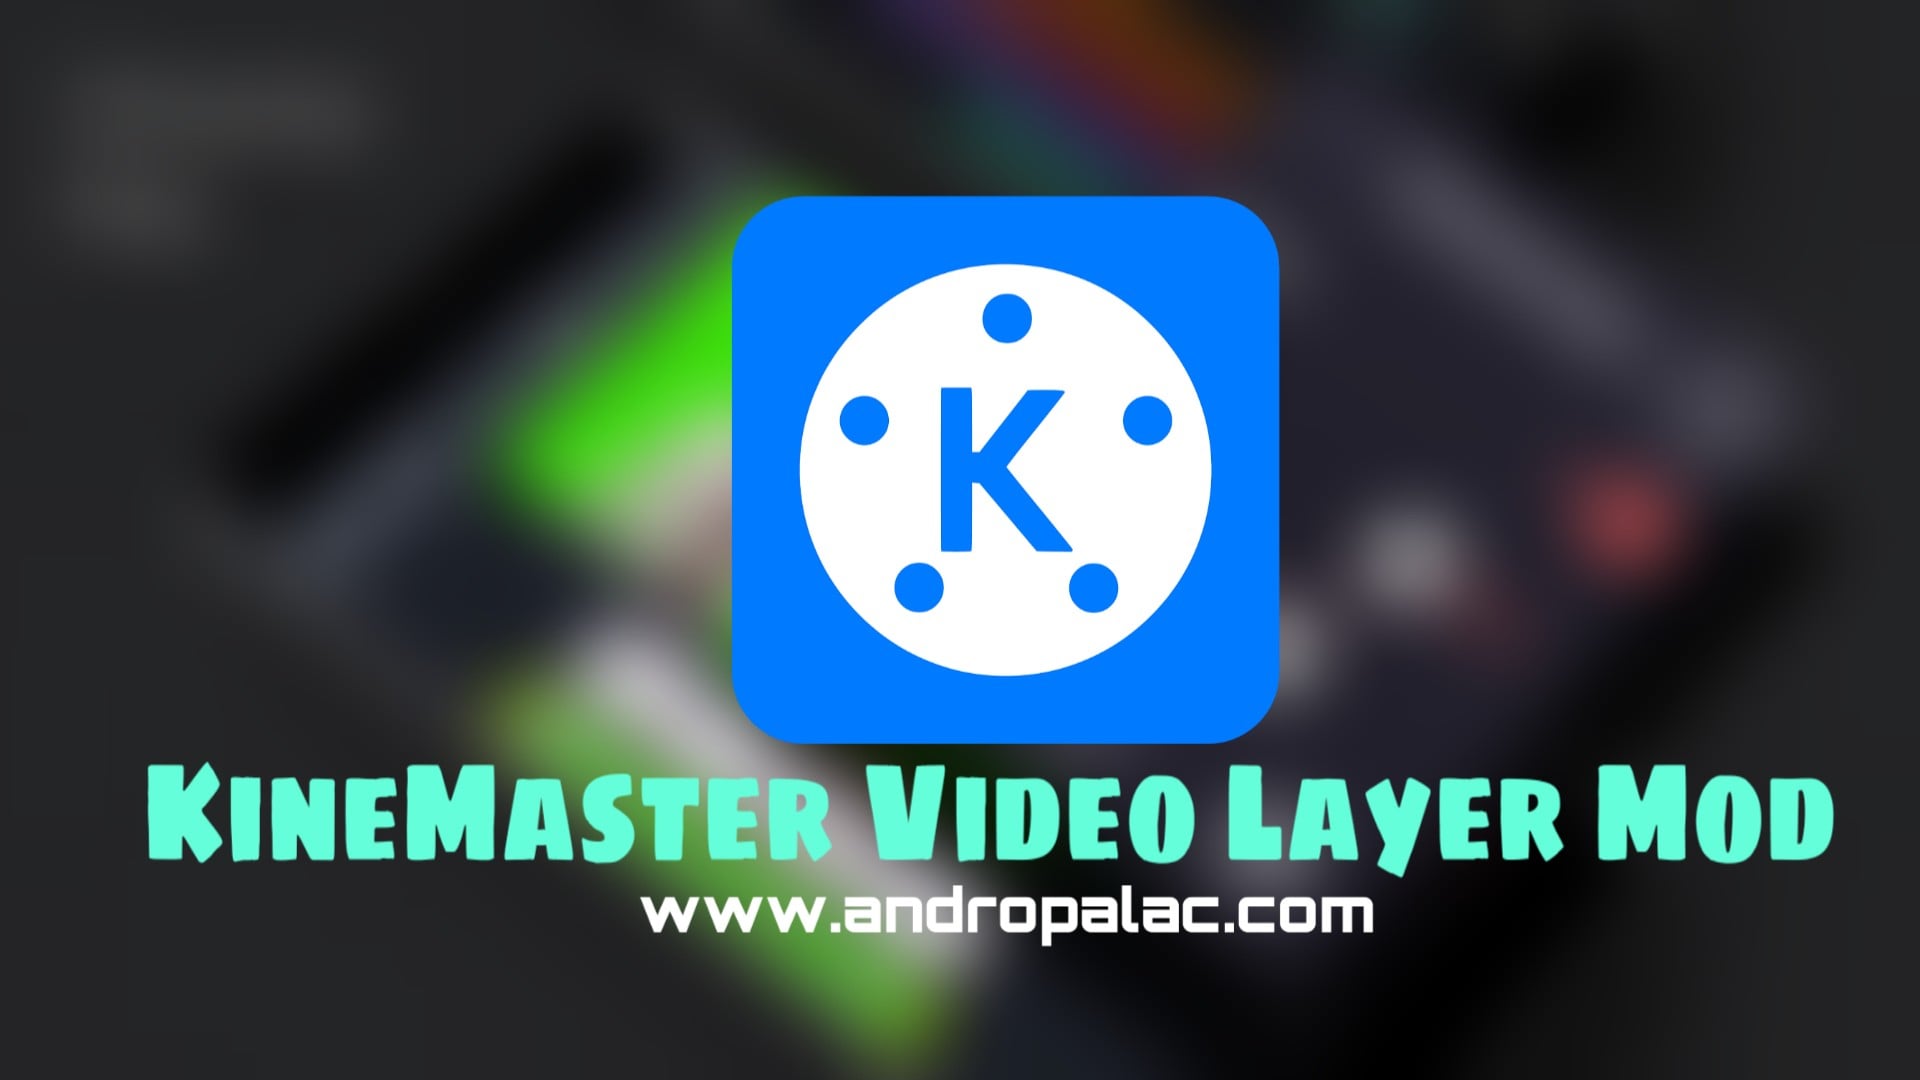 KineMaster Mod APK, KineMaster Video Layer APK, KineMaster Chroma Key Mod